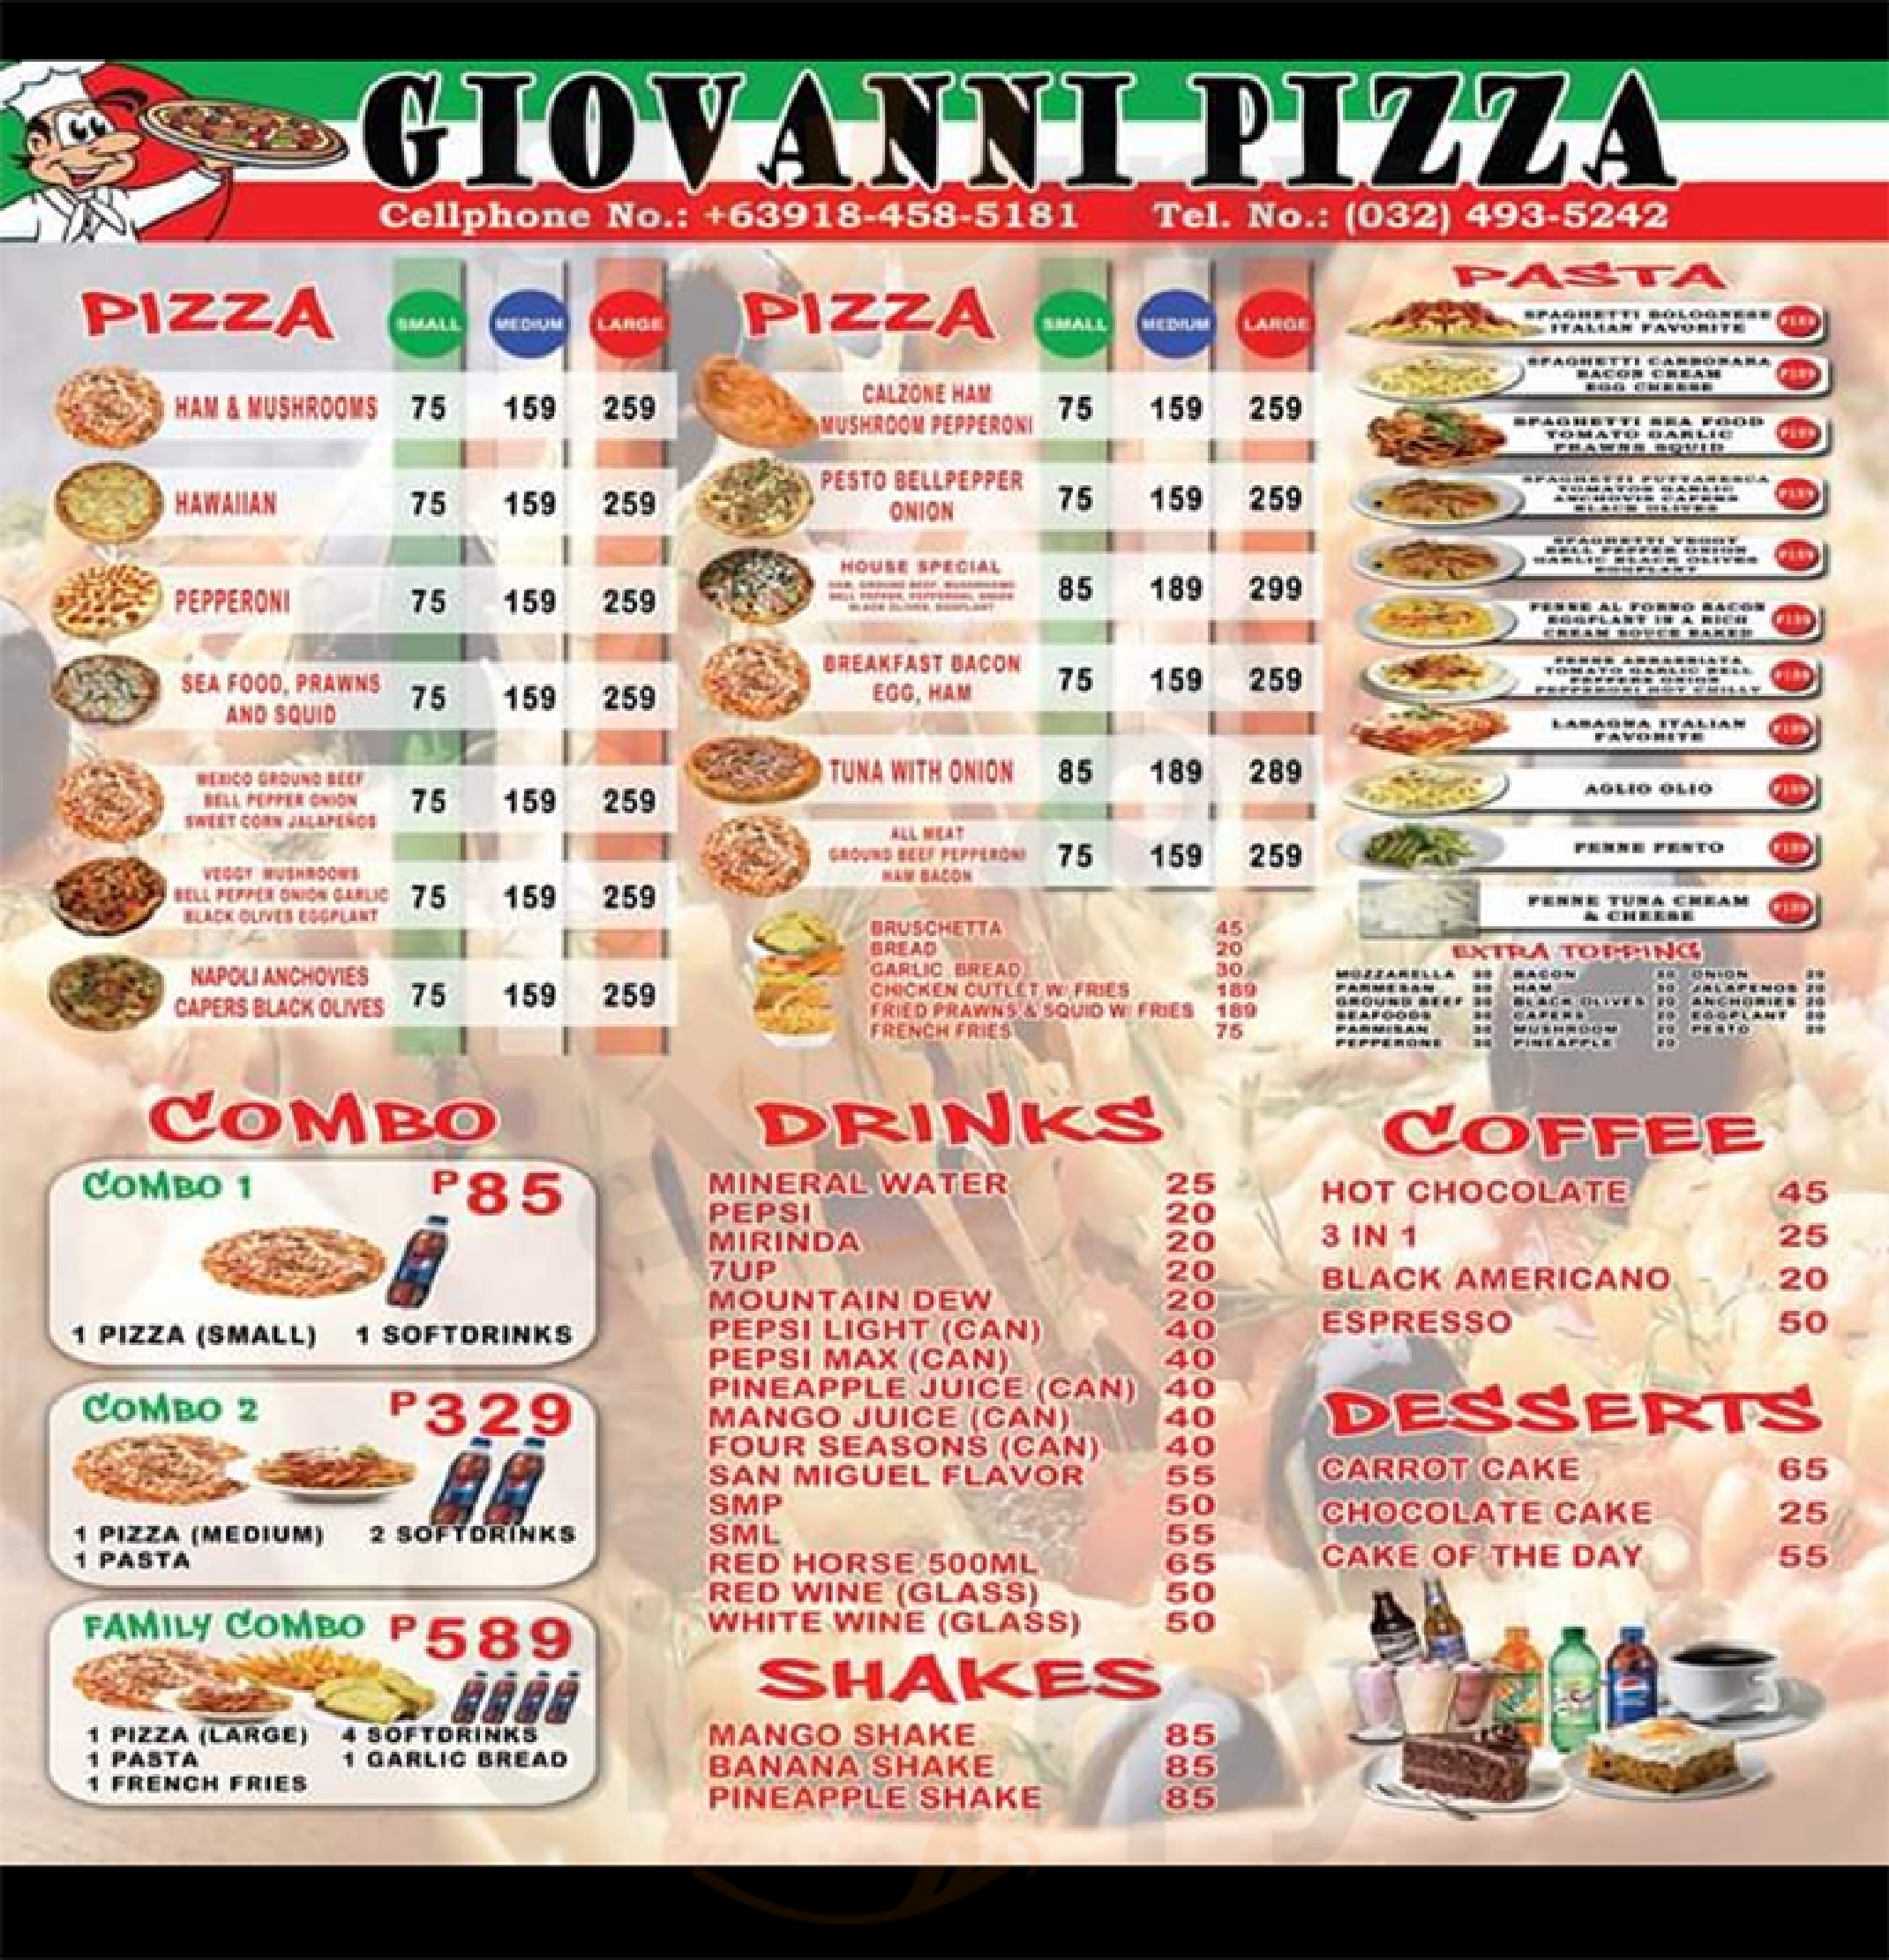 Giovanni Italia Pizza Cebu Island Menu - 1